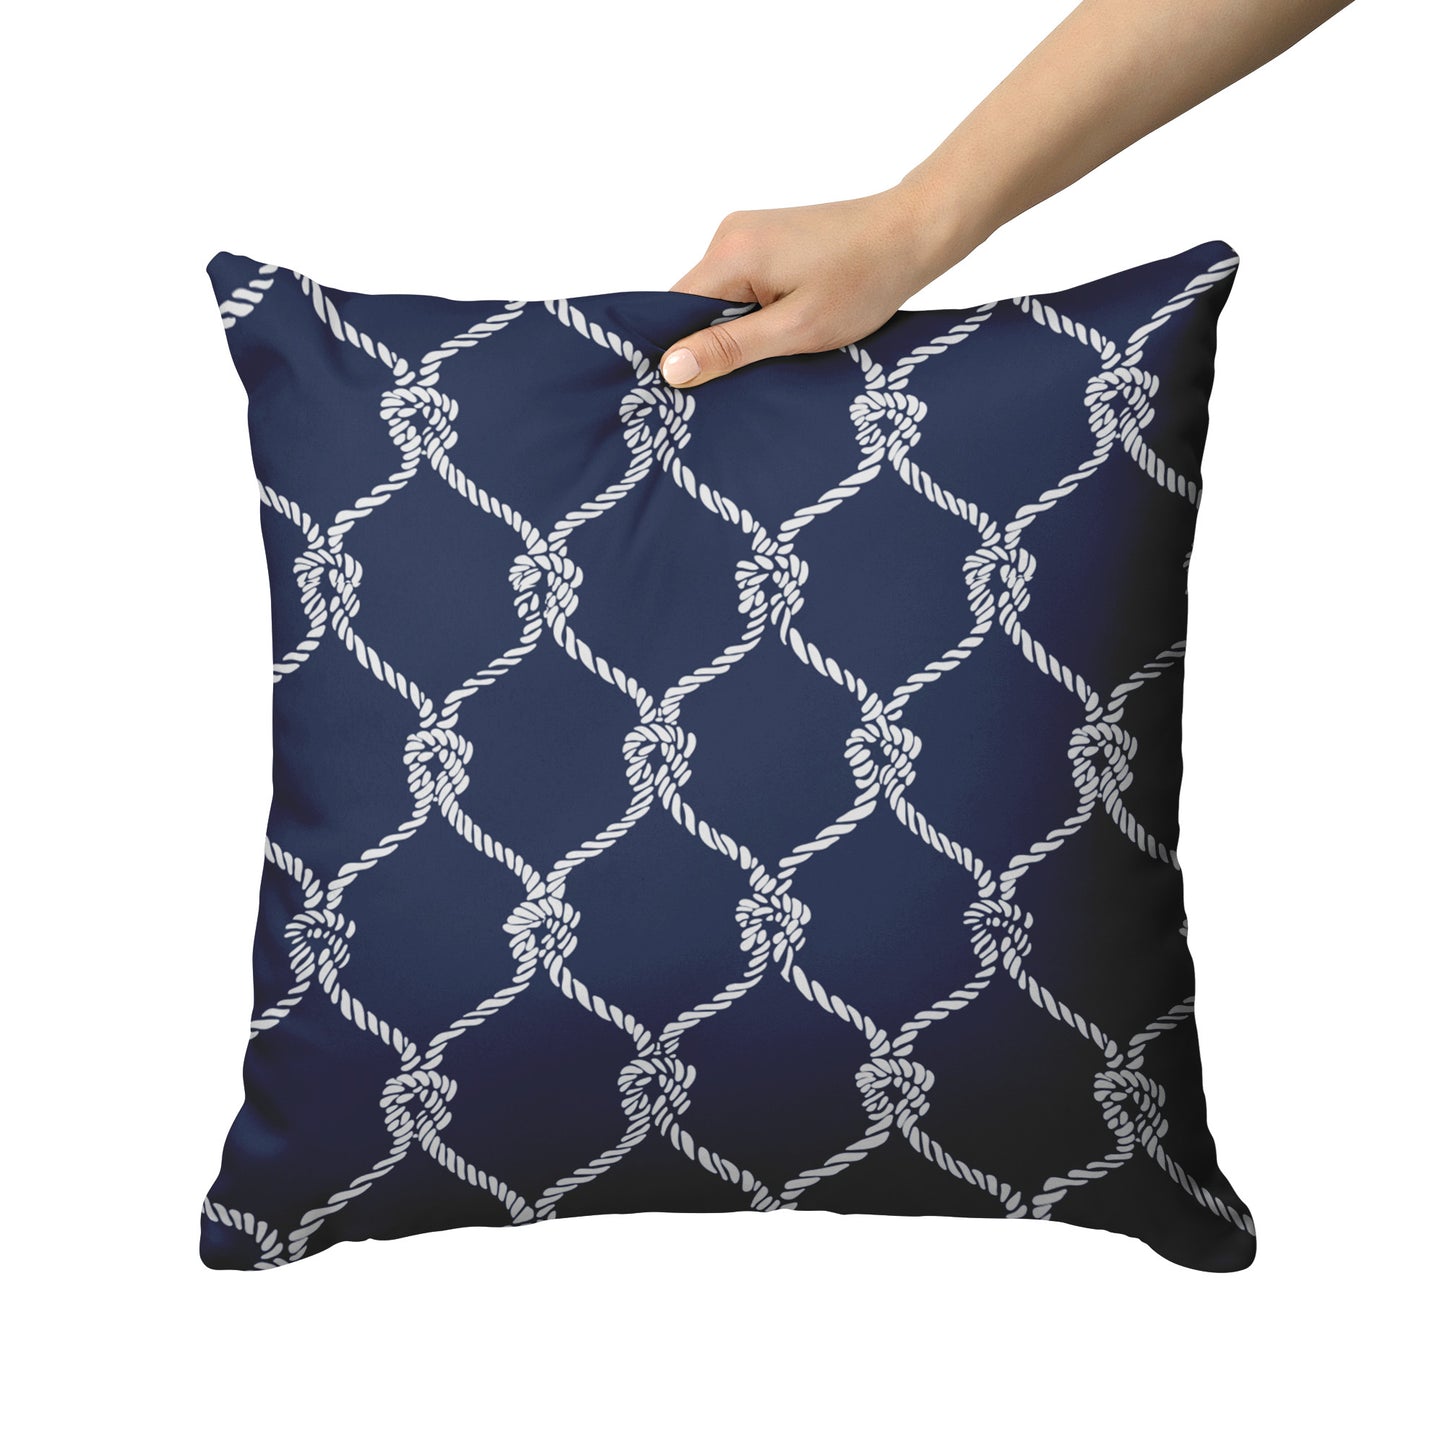 Nautical Netting Design on Navy Blue Background, Throw Pillow